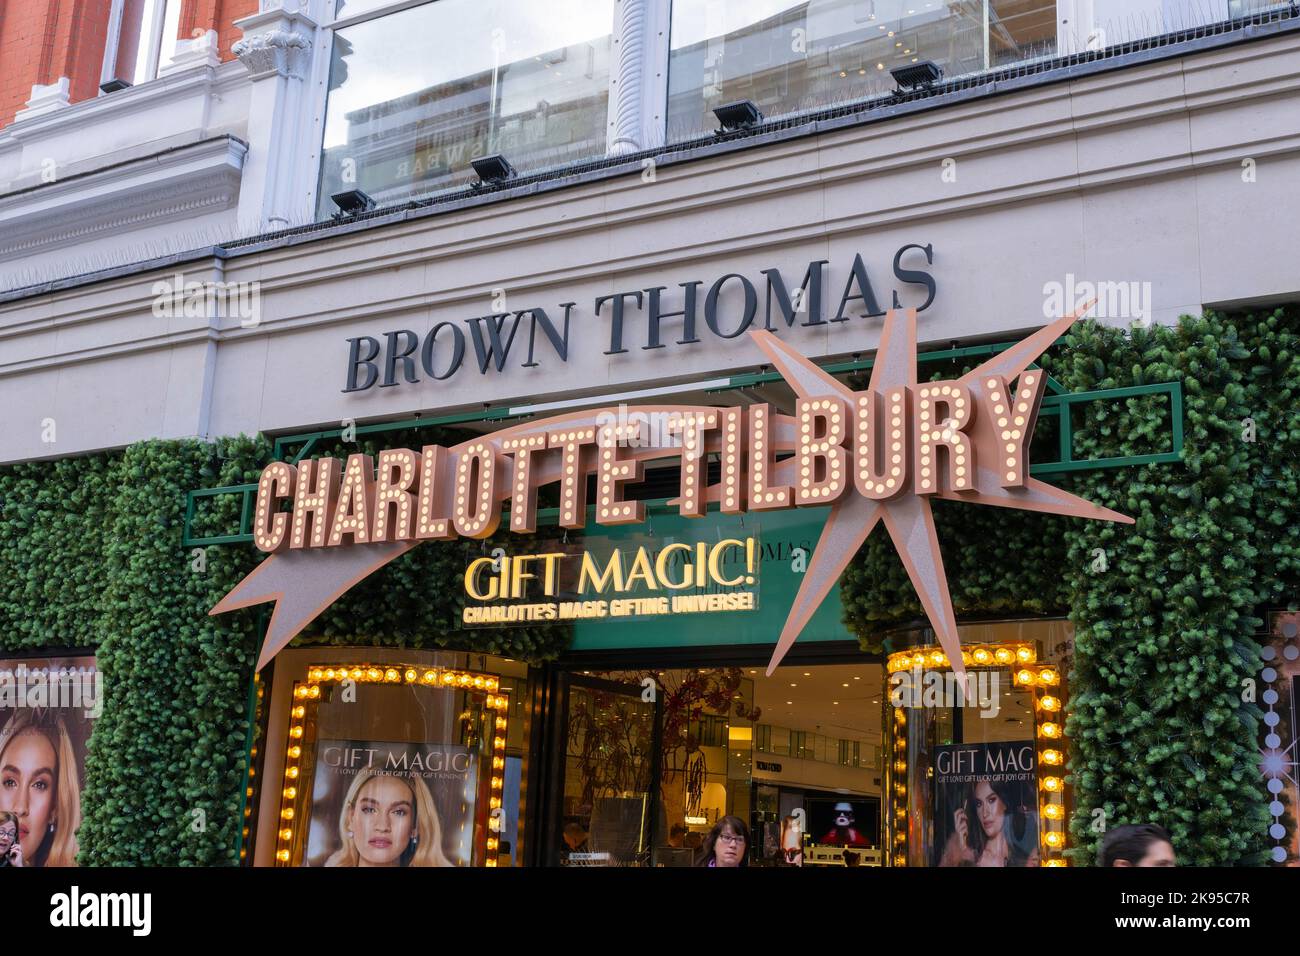 Ireland Eire Dublin Grafton Street iconic landmark Brown Thomas luxury retail department store with Charlotte Tilbury cosmetics gift magic promotion Stock Photo